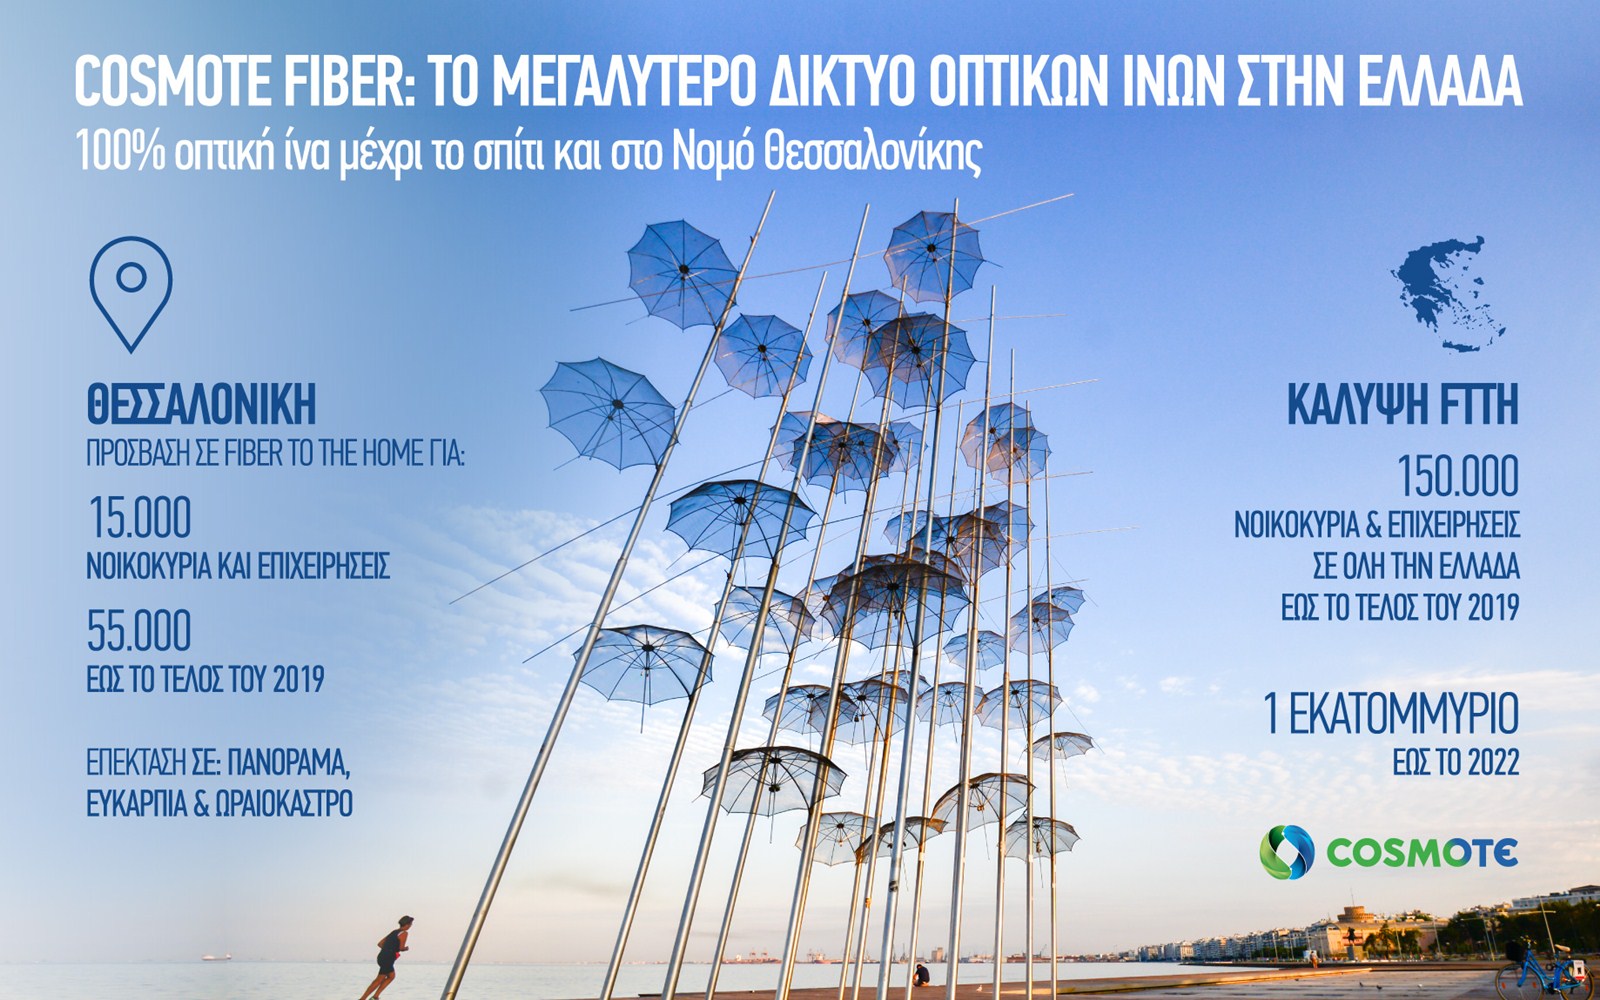 COSMOTE Fiber: 100% οπτική ίνα μέχρι το σπίτι και στο νομό Θεσσαλονίκης